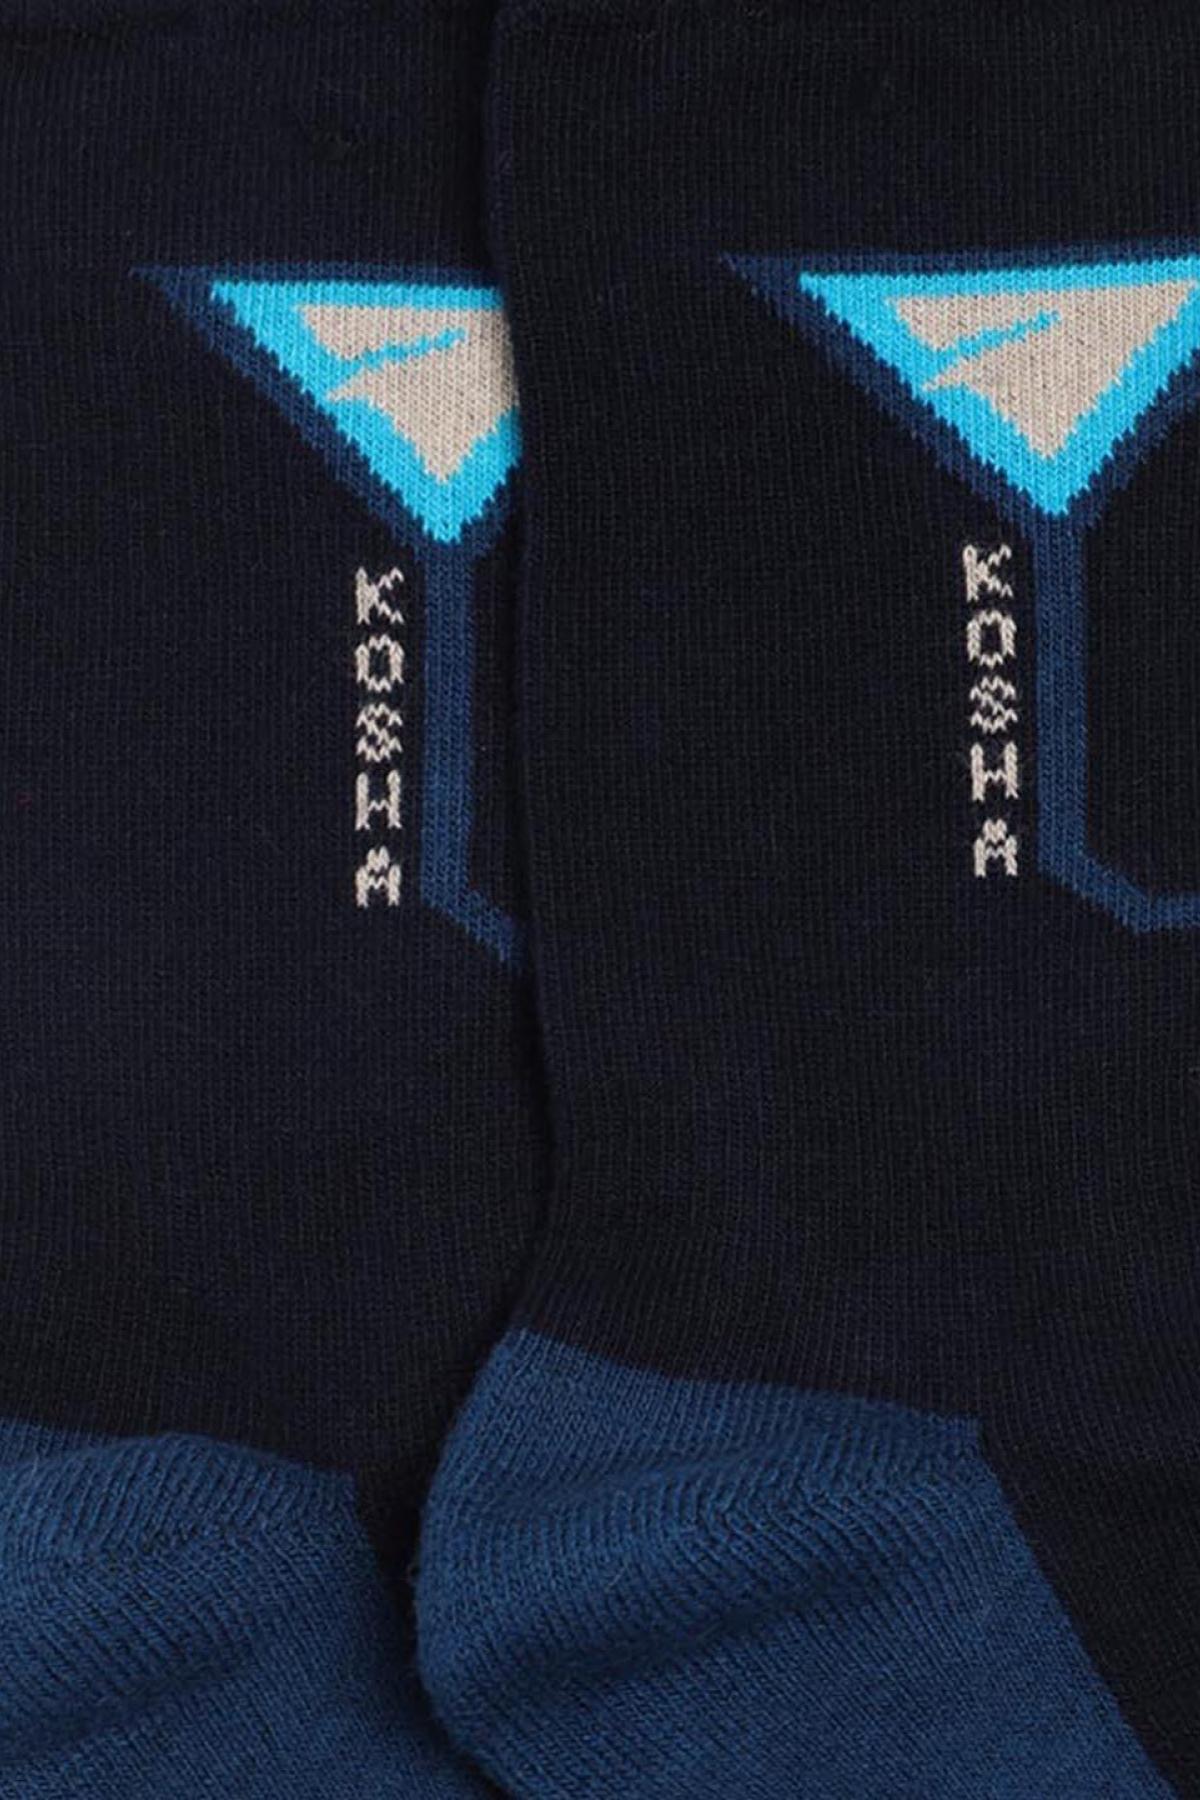 Navy & Black Regular Length Cotton Sports Socks | Men